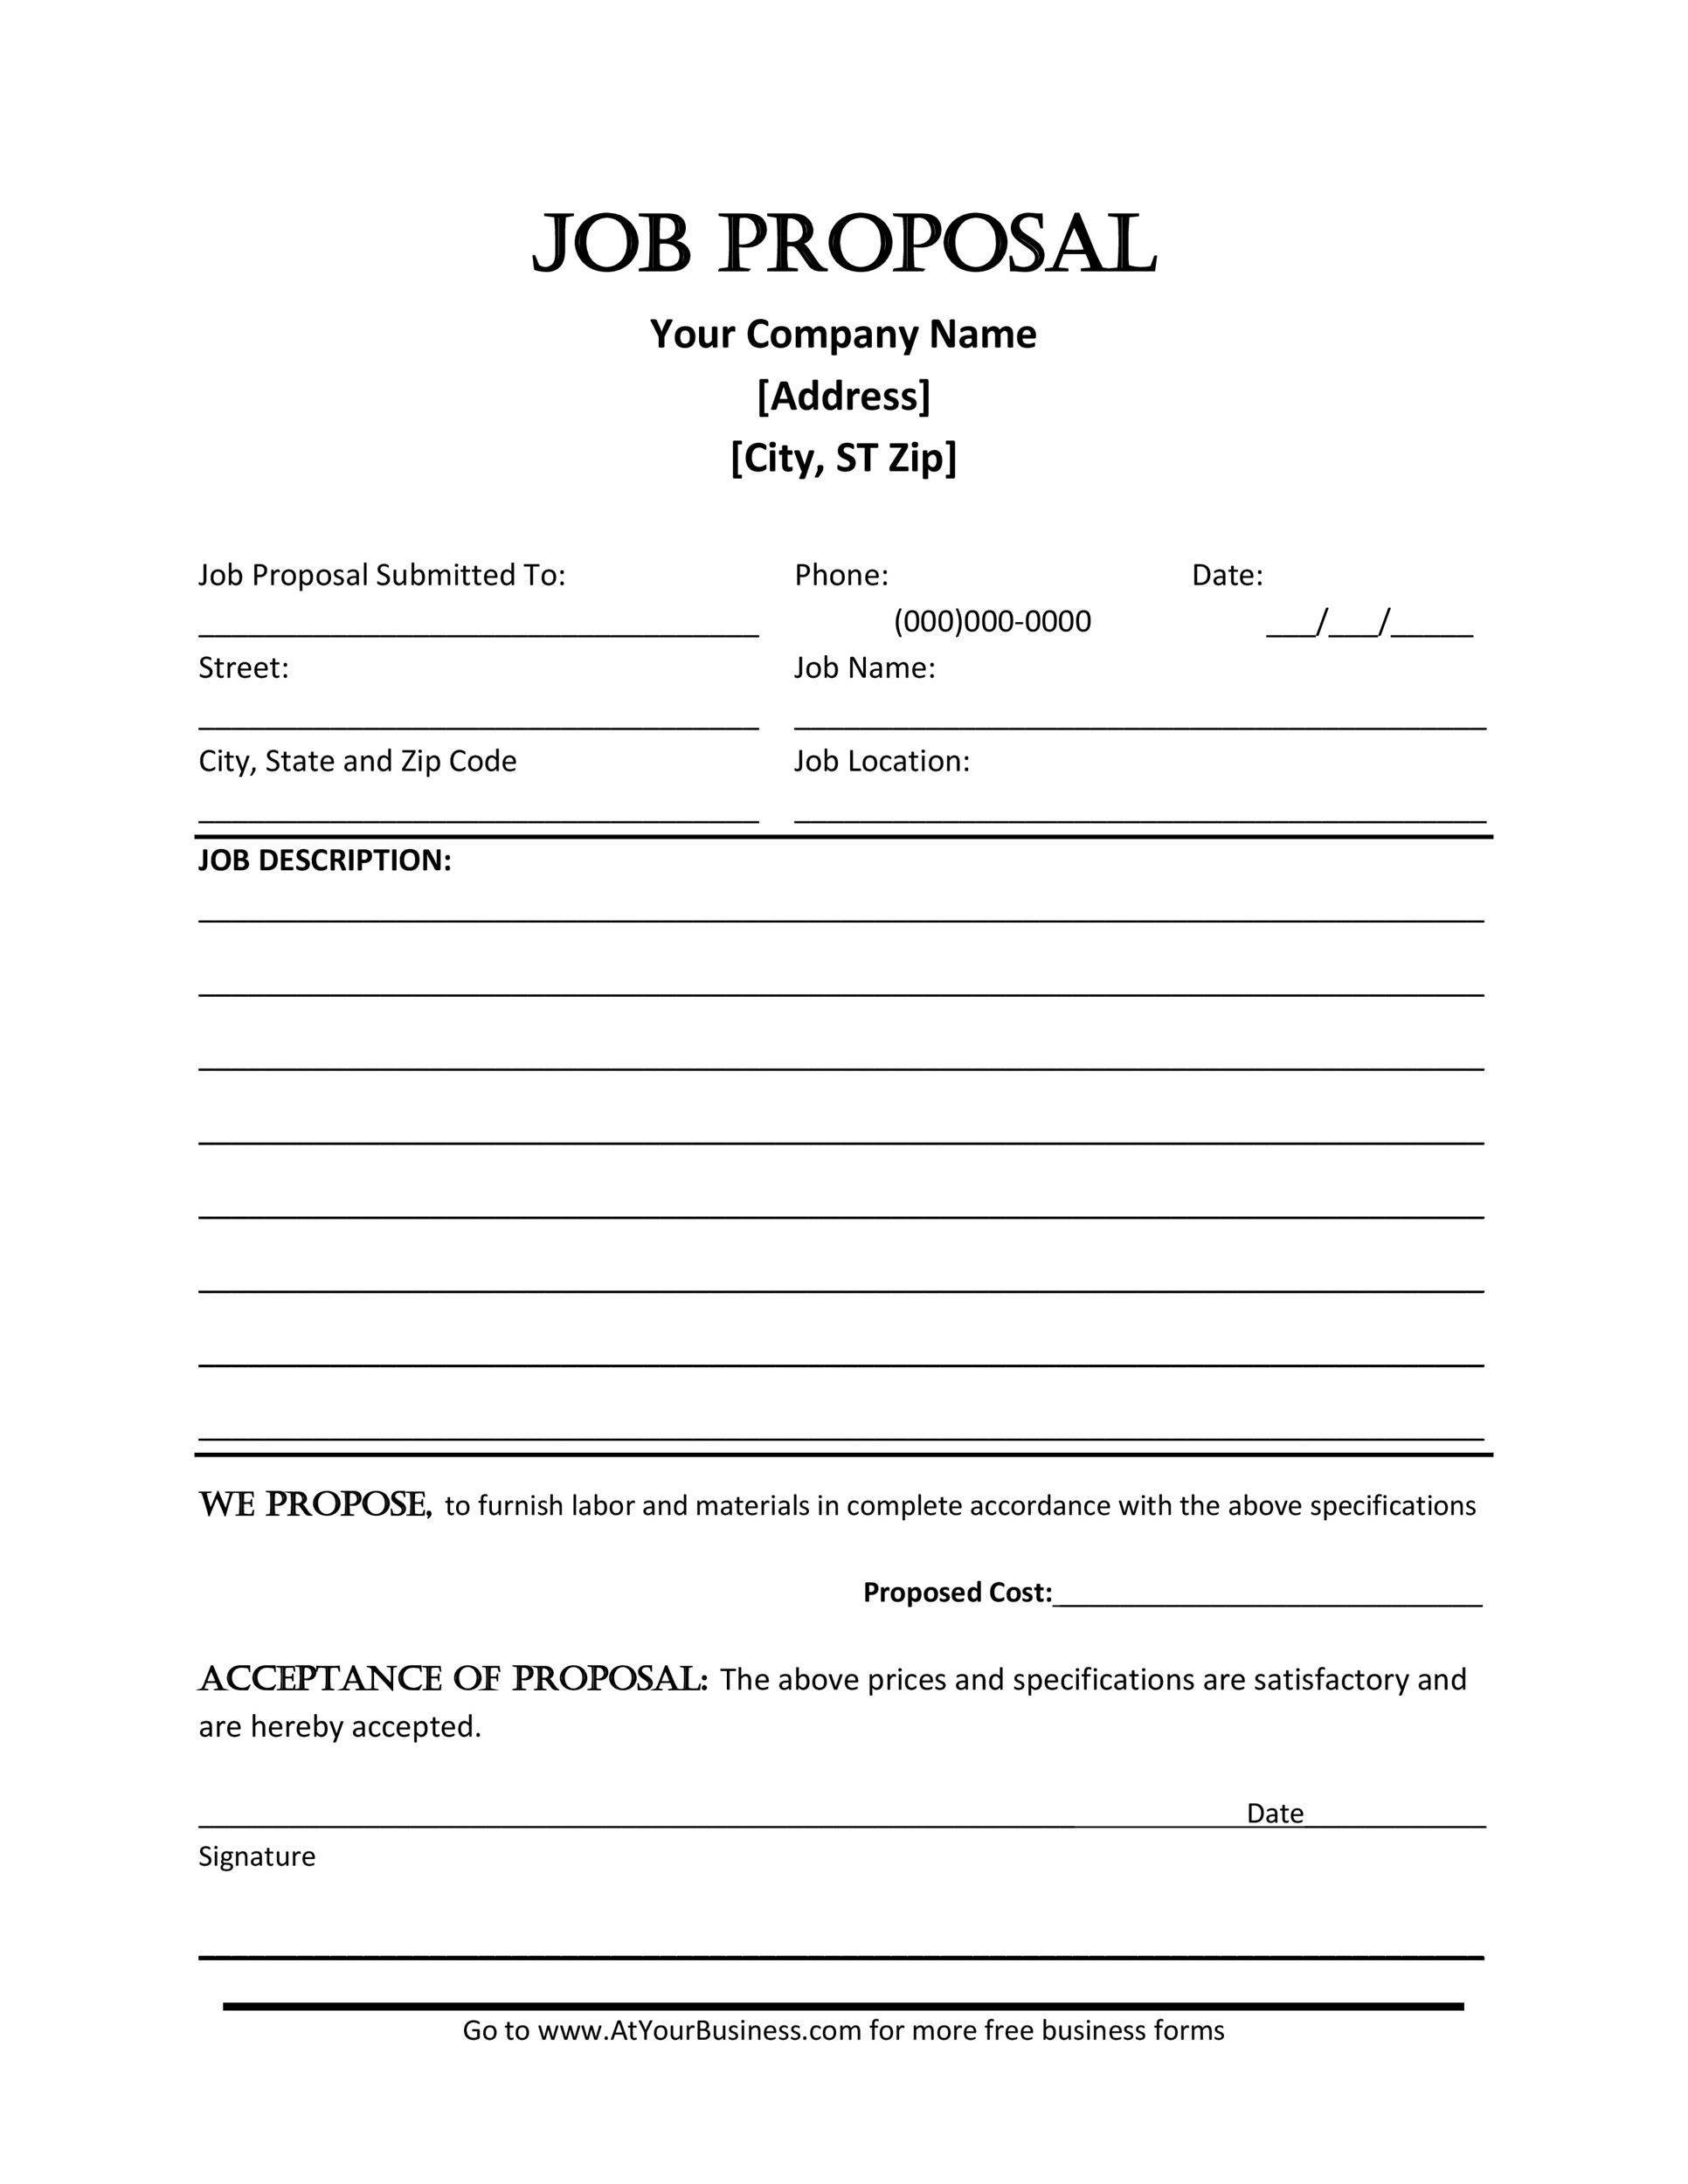 Free Job Proposal Template 07